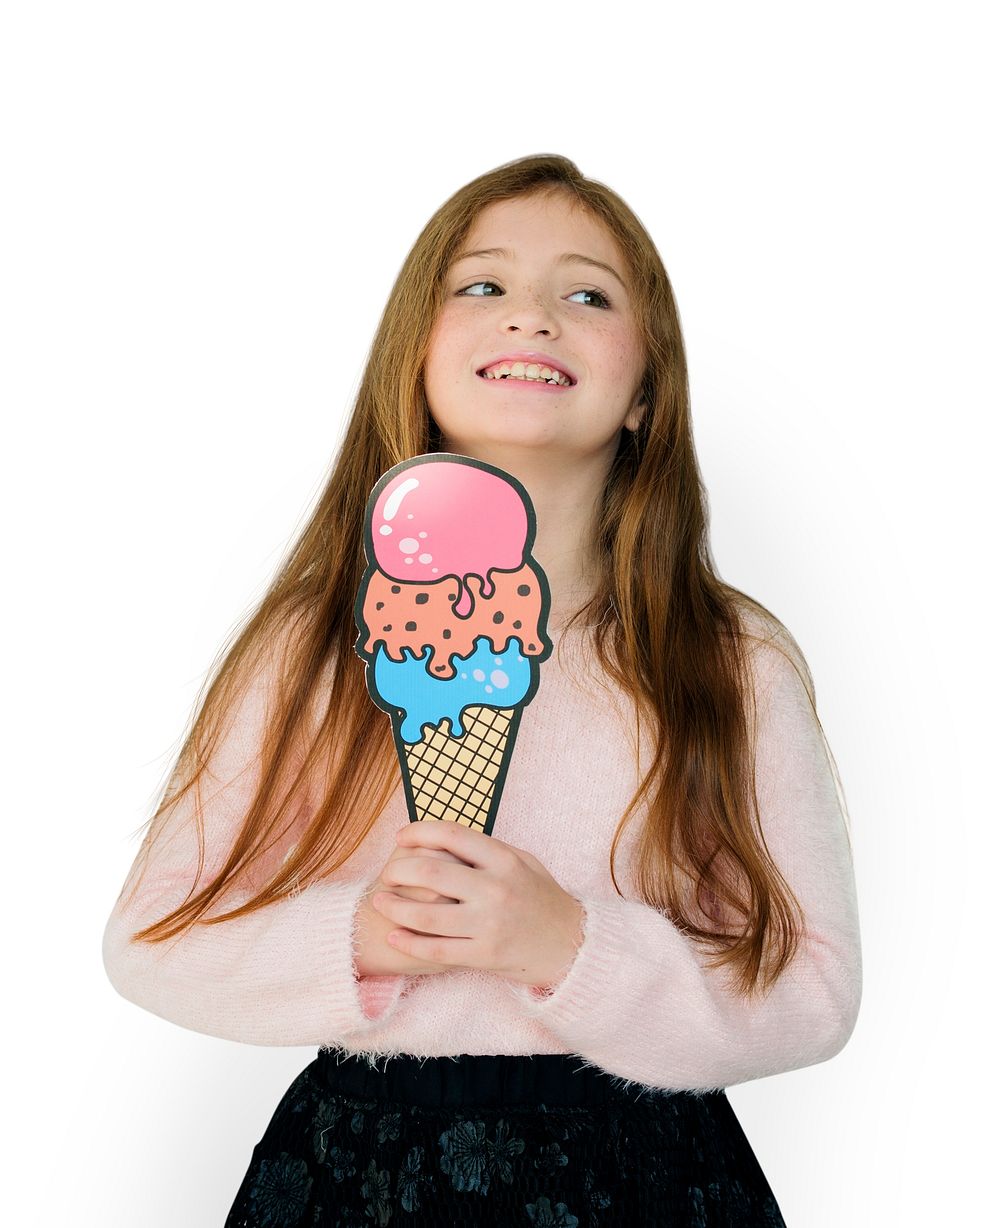 Little Girl Smiling Happiness Paper Craft Arts Ice Cream Studio Portrait